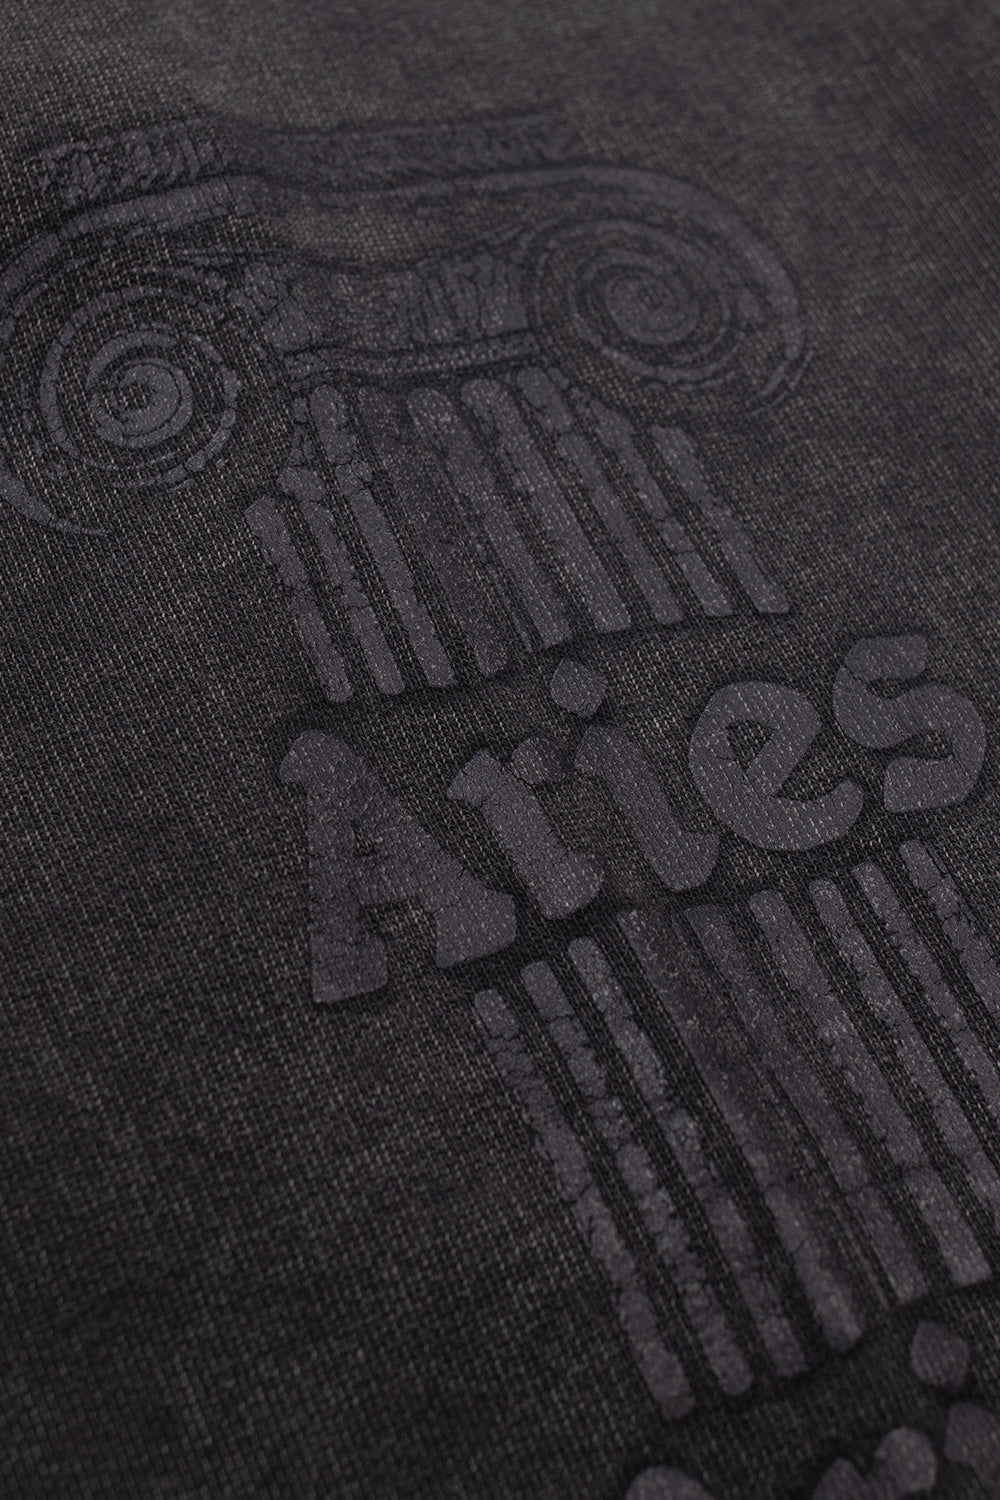 Aries Aged Ancient Column Sweatshirt Black - BONKERS